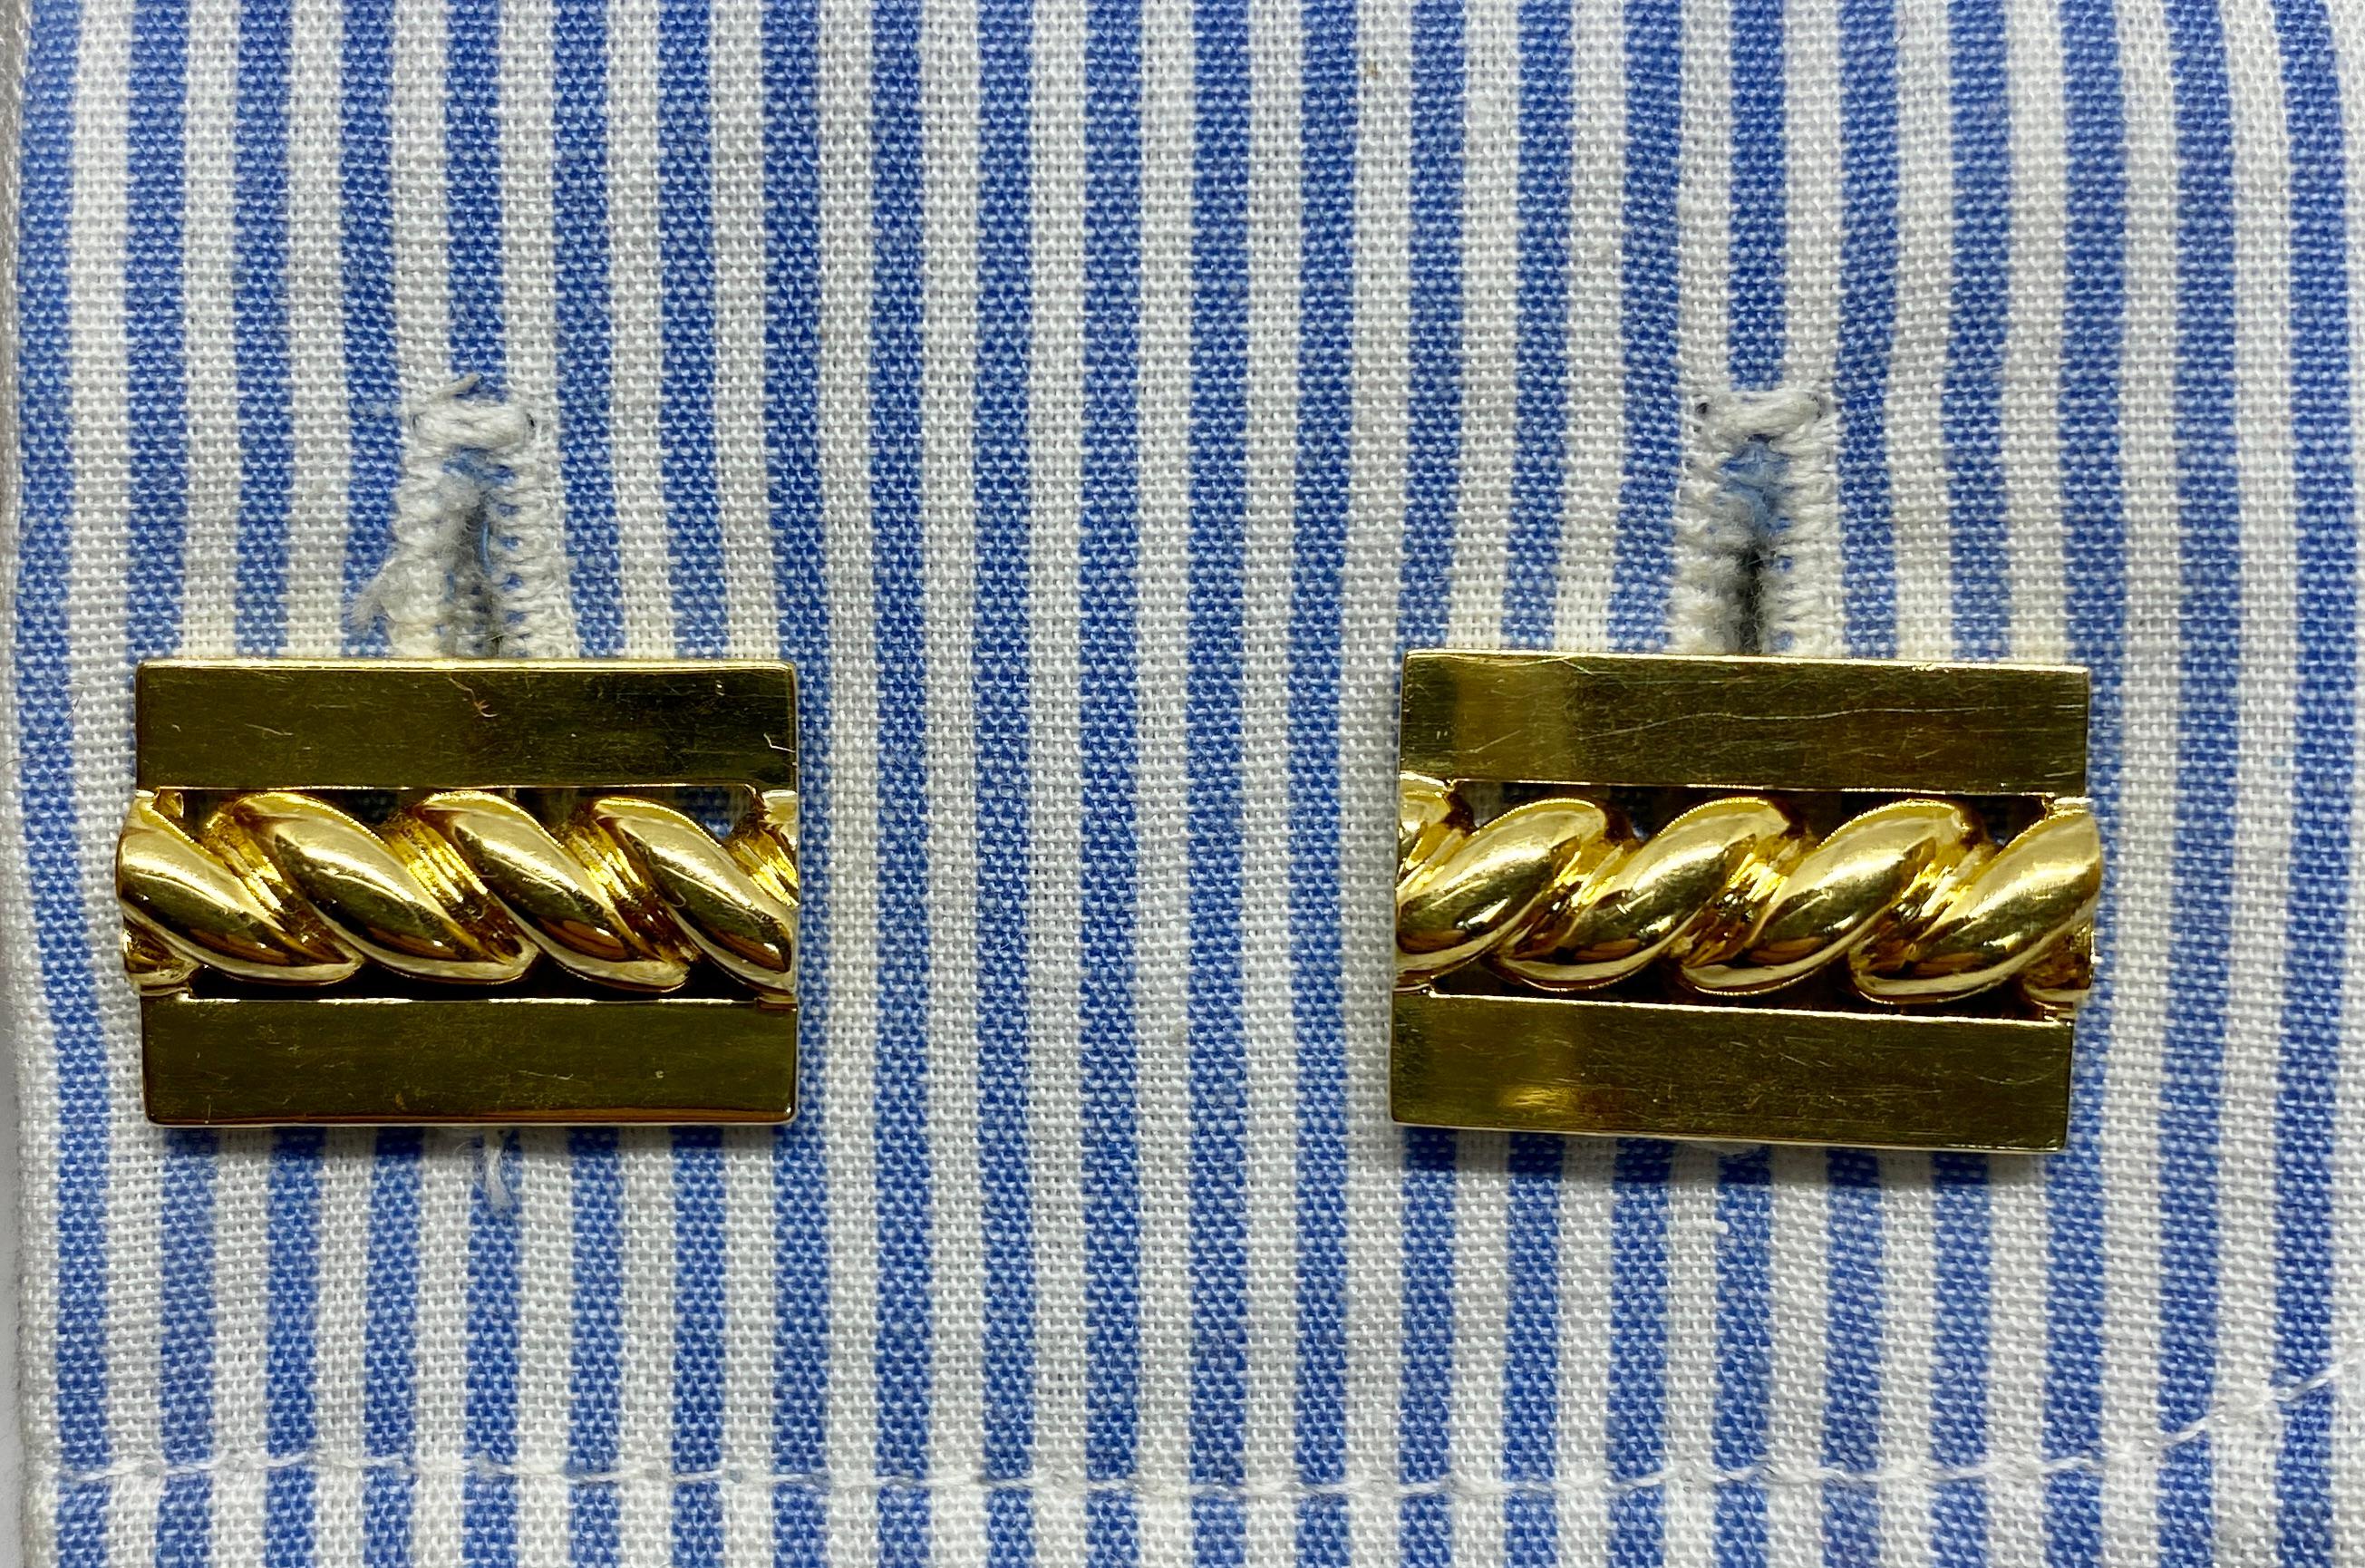 18k gold cufflinks